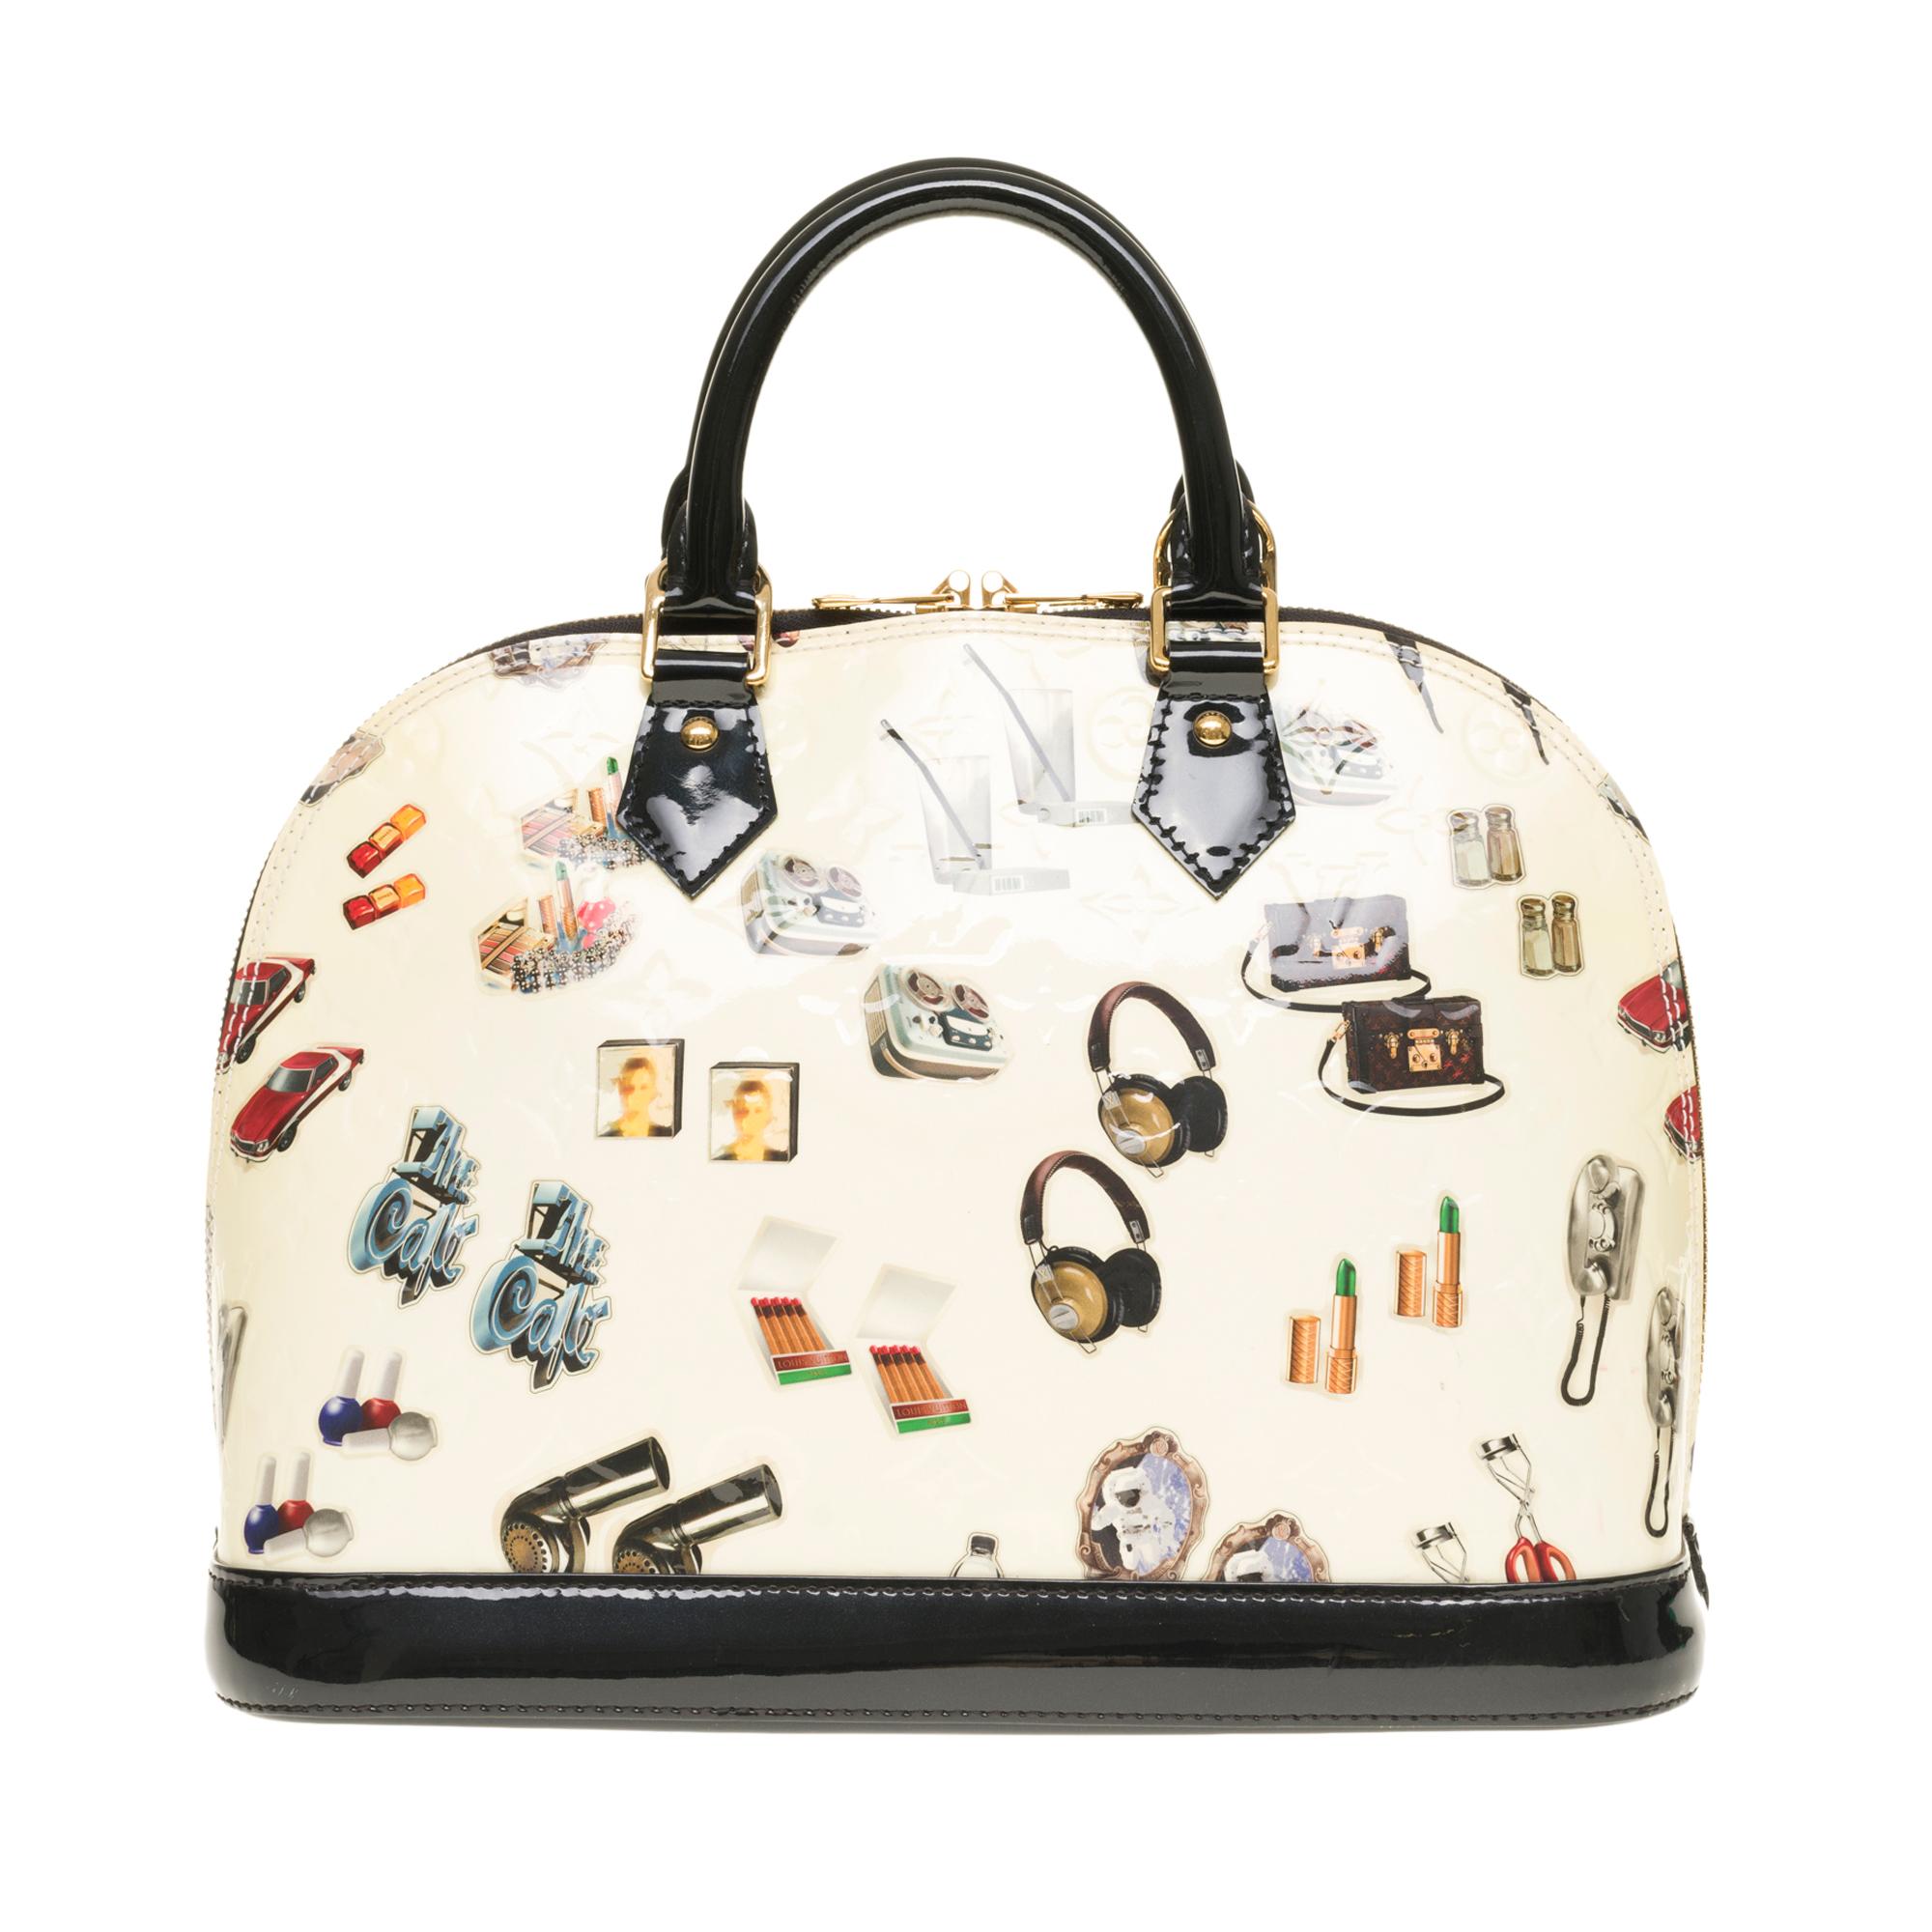 Collector’s handbag of the Nicolas Ghesquière Collection- Year 2015

Louis Vuitton Alma limited edition 